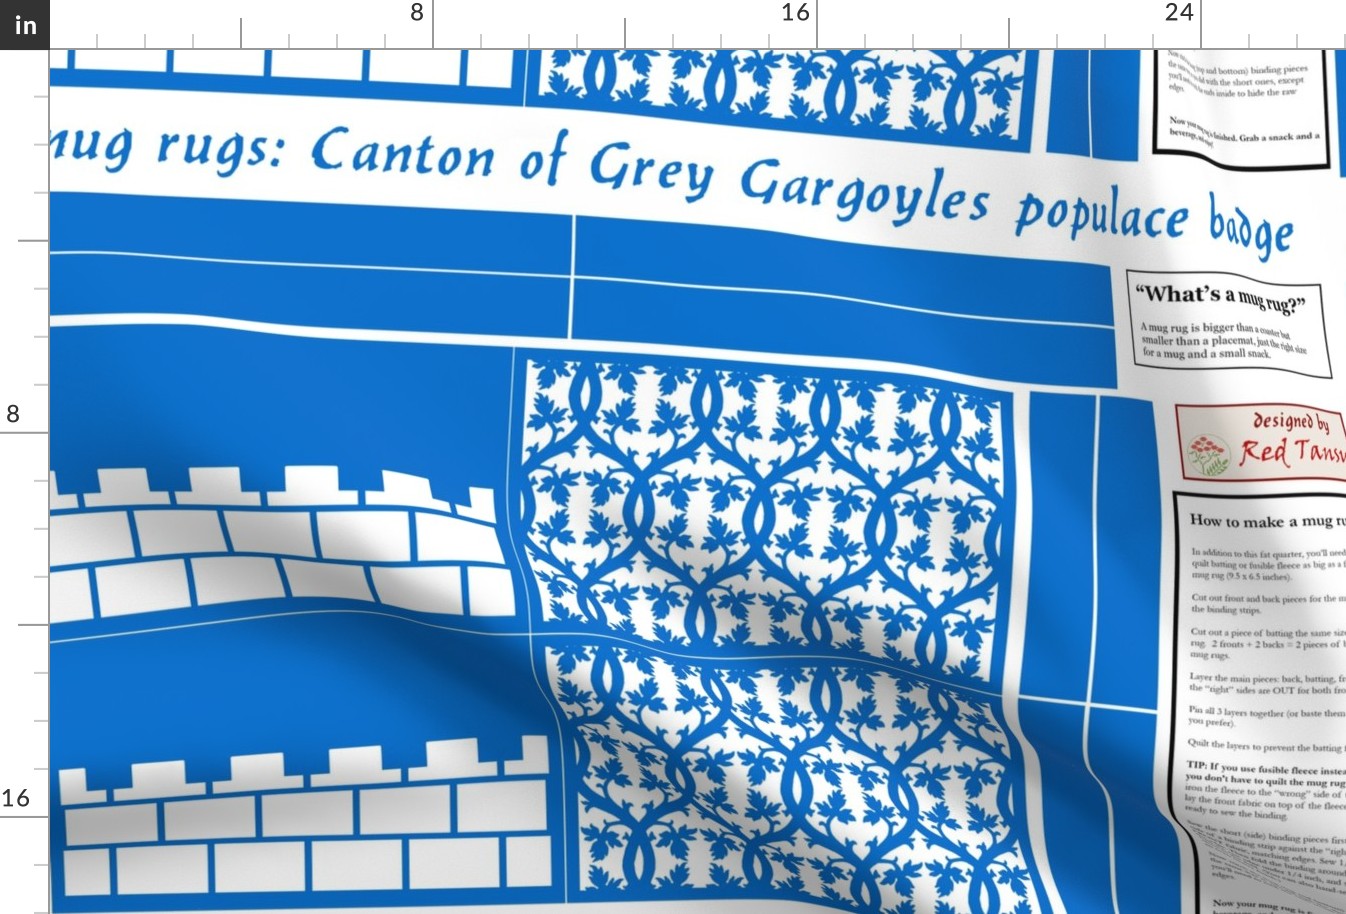 mug rugs: Canton of Grey Gargoyles (SCA)